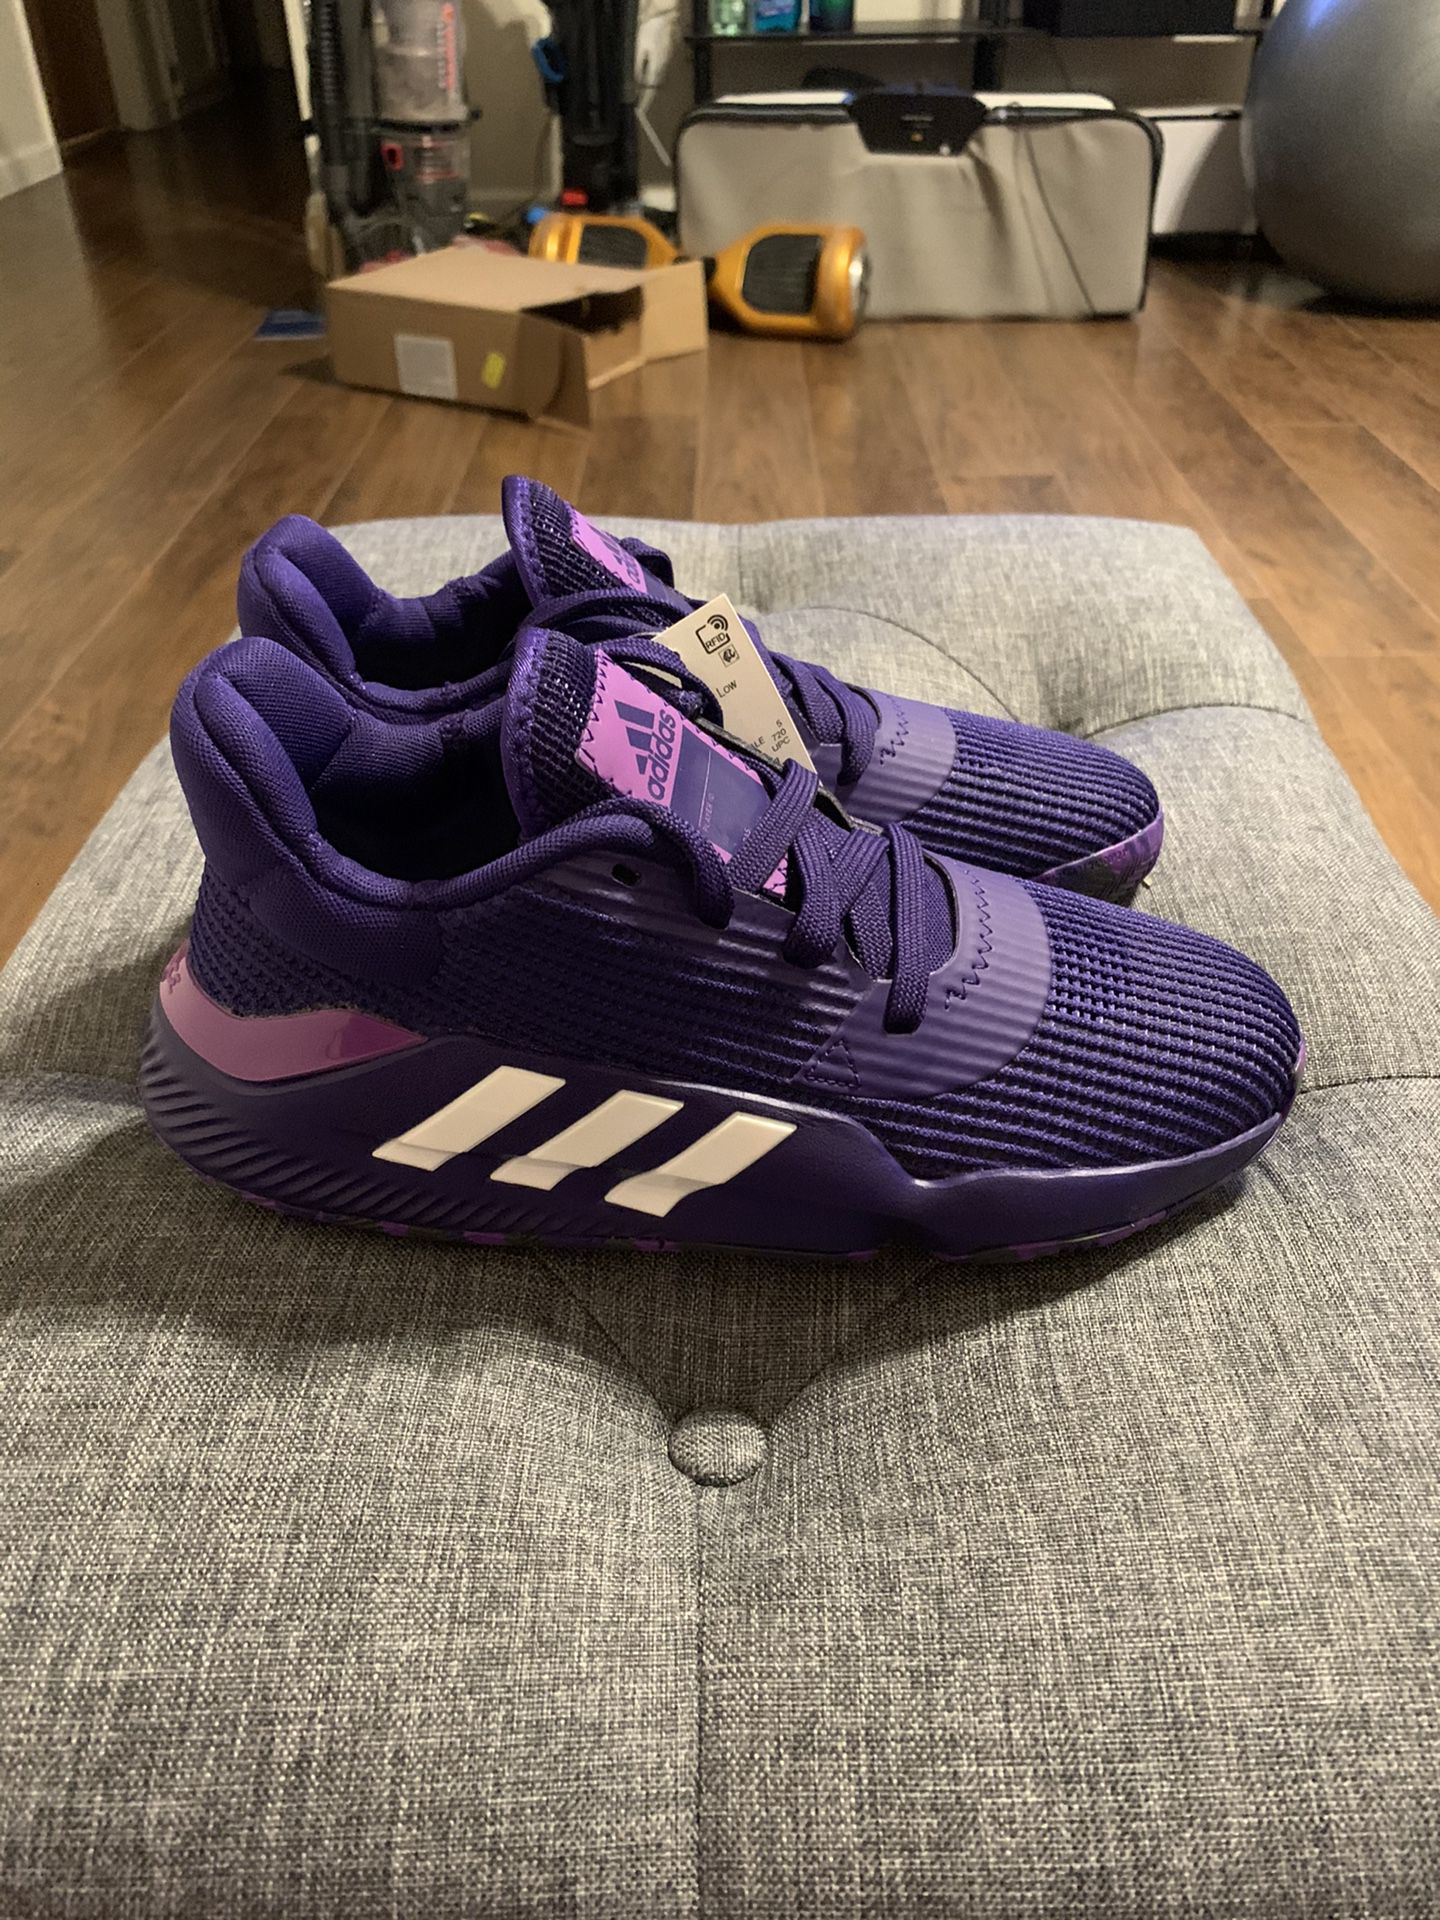 Adidas Pro Bounce 2019 Low Purple